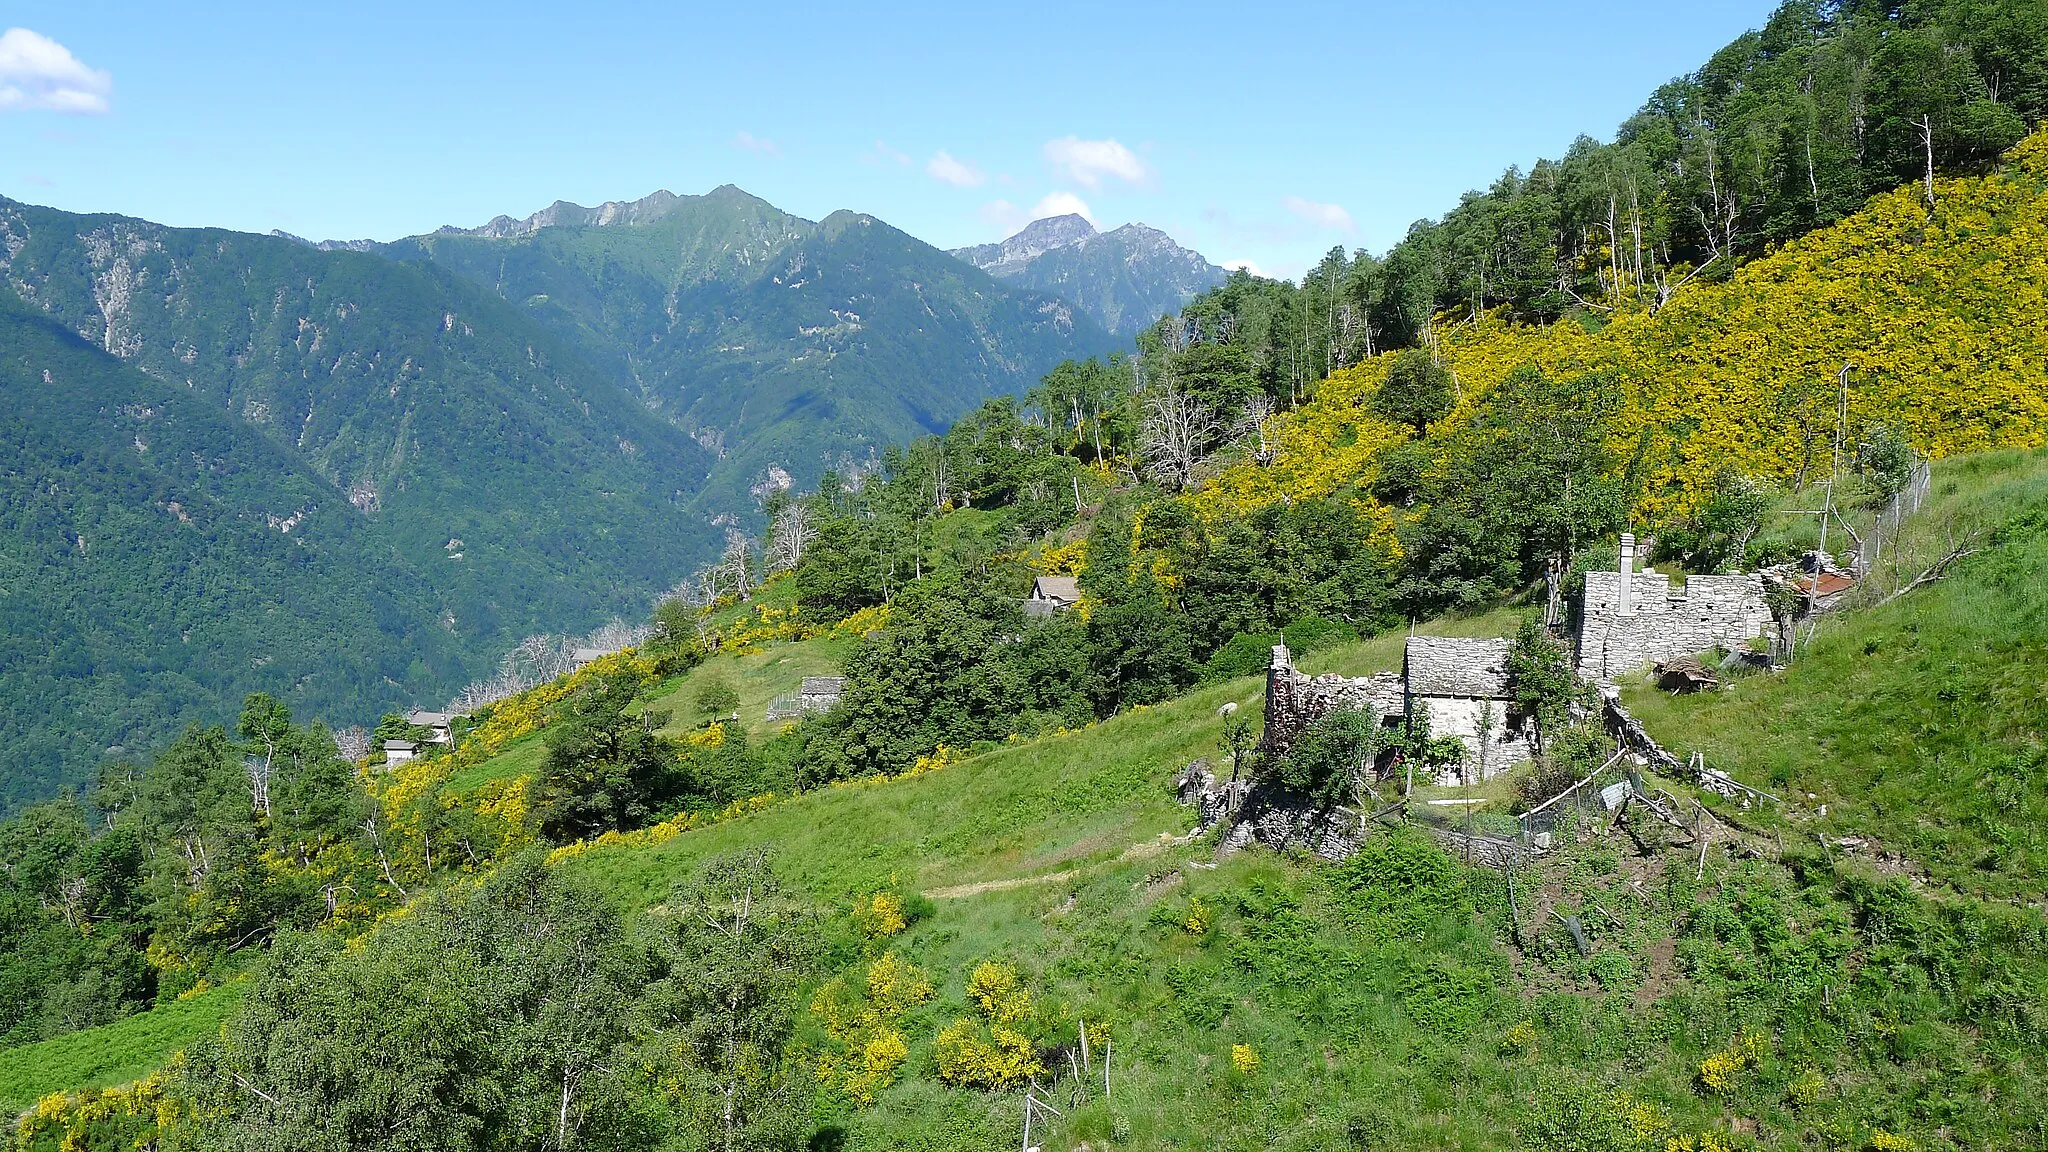 Photo showing: Day 1: From Gordevio (Maggia Valley) via Mergozzo, Alpe Pizzit,  Btta di Orgnana, Orgnana Valley, Piano to Lavertezzo (Vezasca Valey). Hiking time including breaks: 9 hours.
Detaillierter Tourenbeschrieb:

die-welt-entdecken.eu/2013/06/26/vom-maggia-ins-verzasca-...